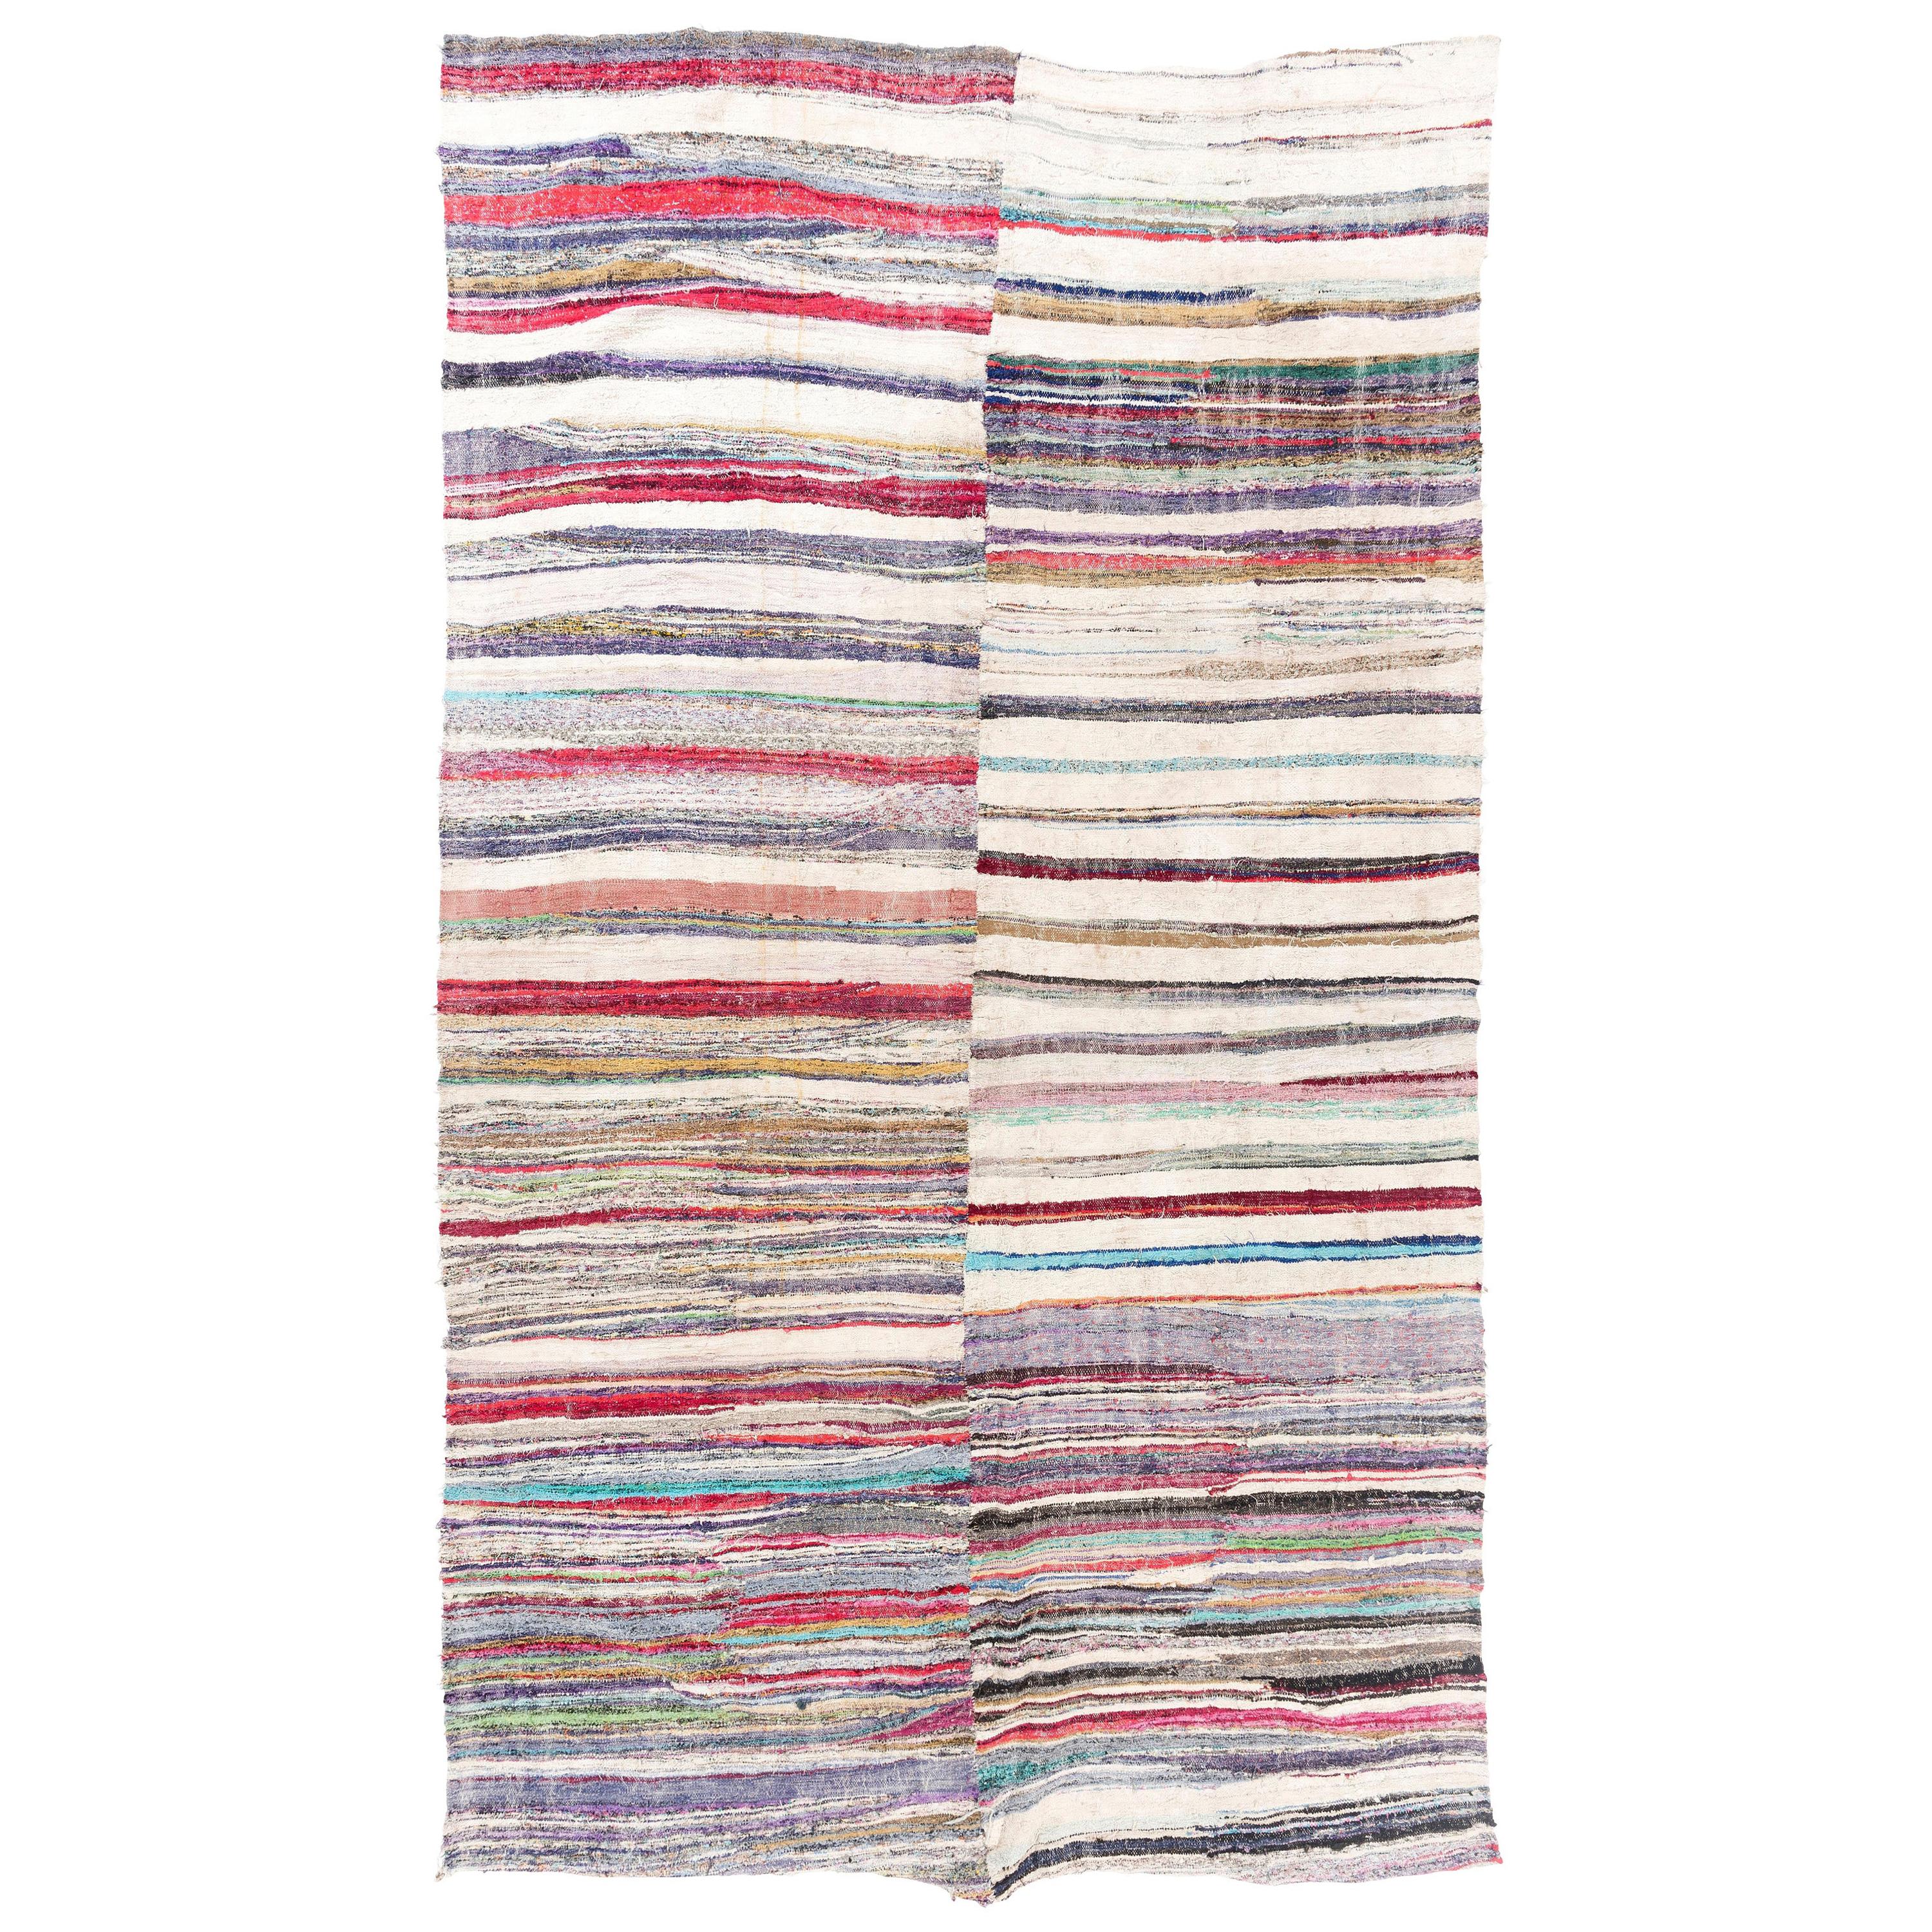 7.4x12.7 Ft Vintage Striped Pattern Cotton Rag Rug. Flat-Weave Kilim Carpet